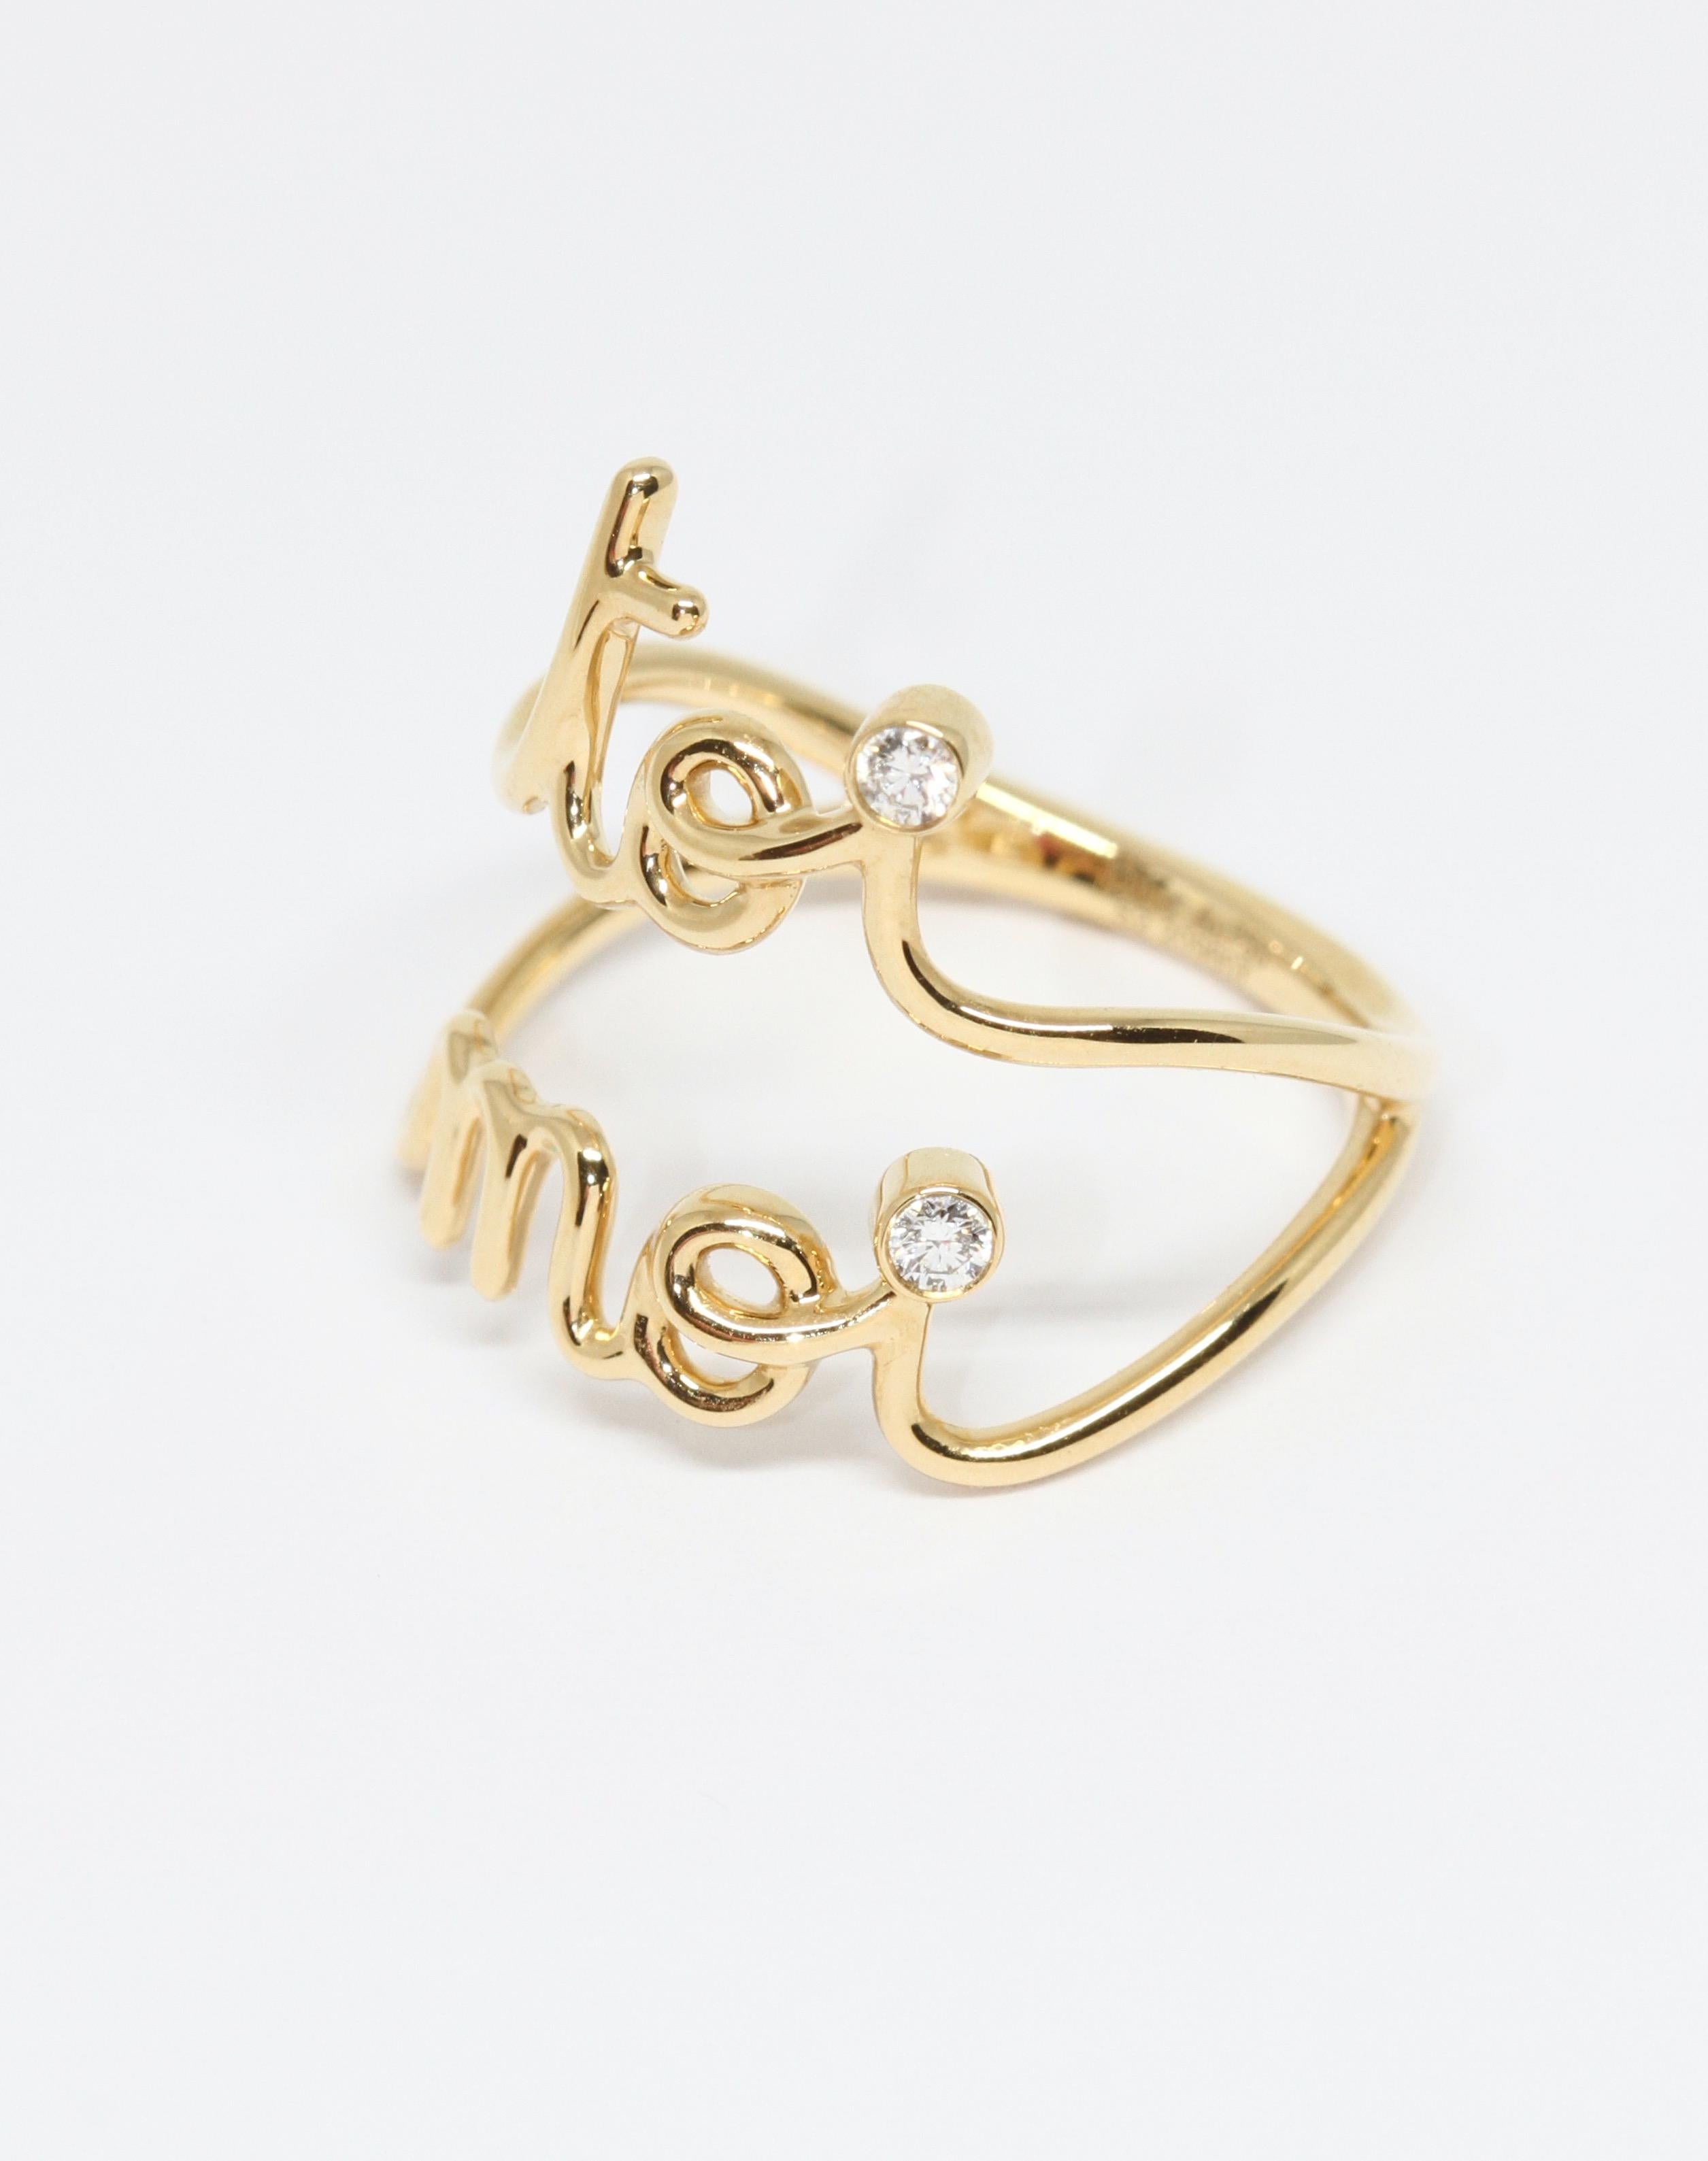  Christian Dior Oui Toi Moi Bague en or jaune 18 carats avec diamants Unisexe 